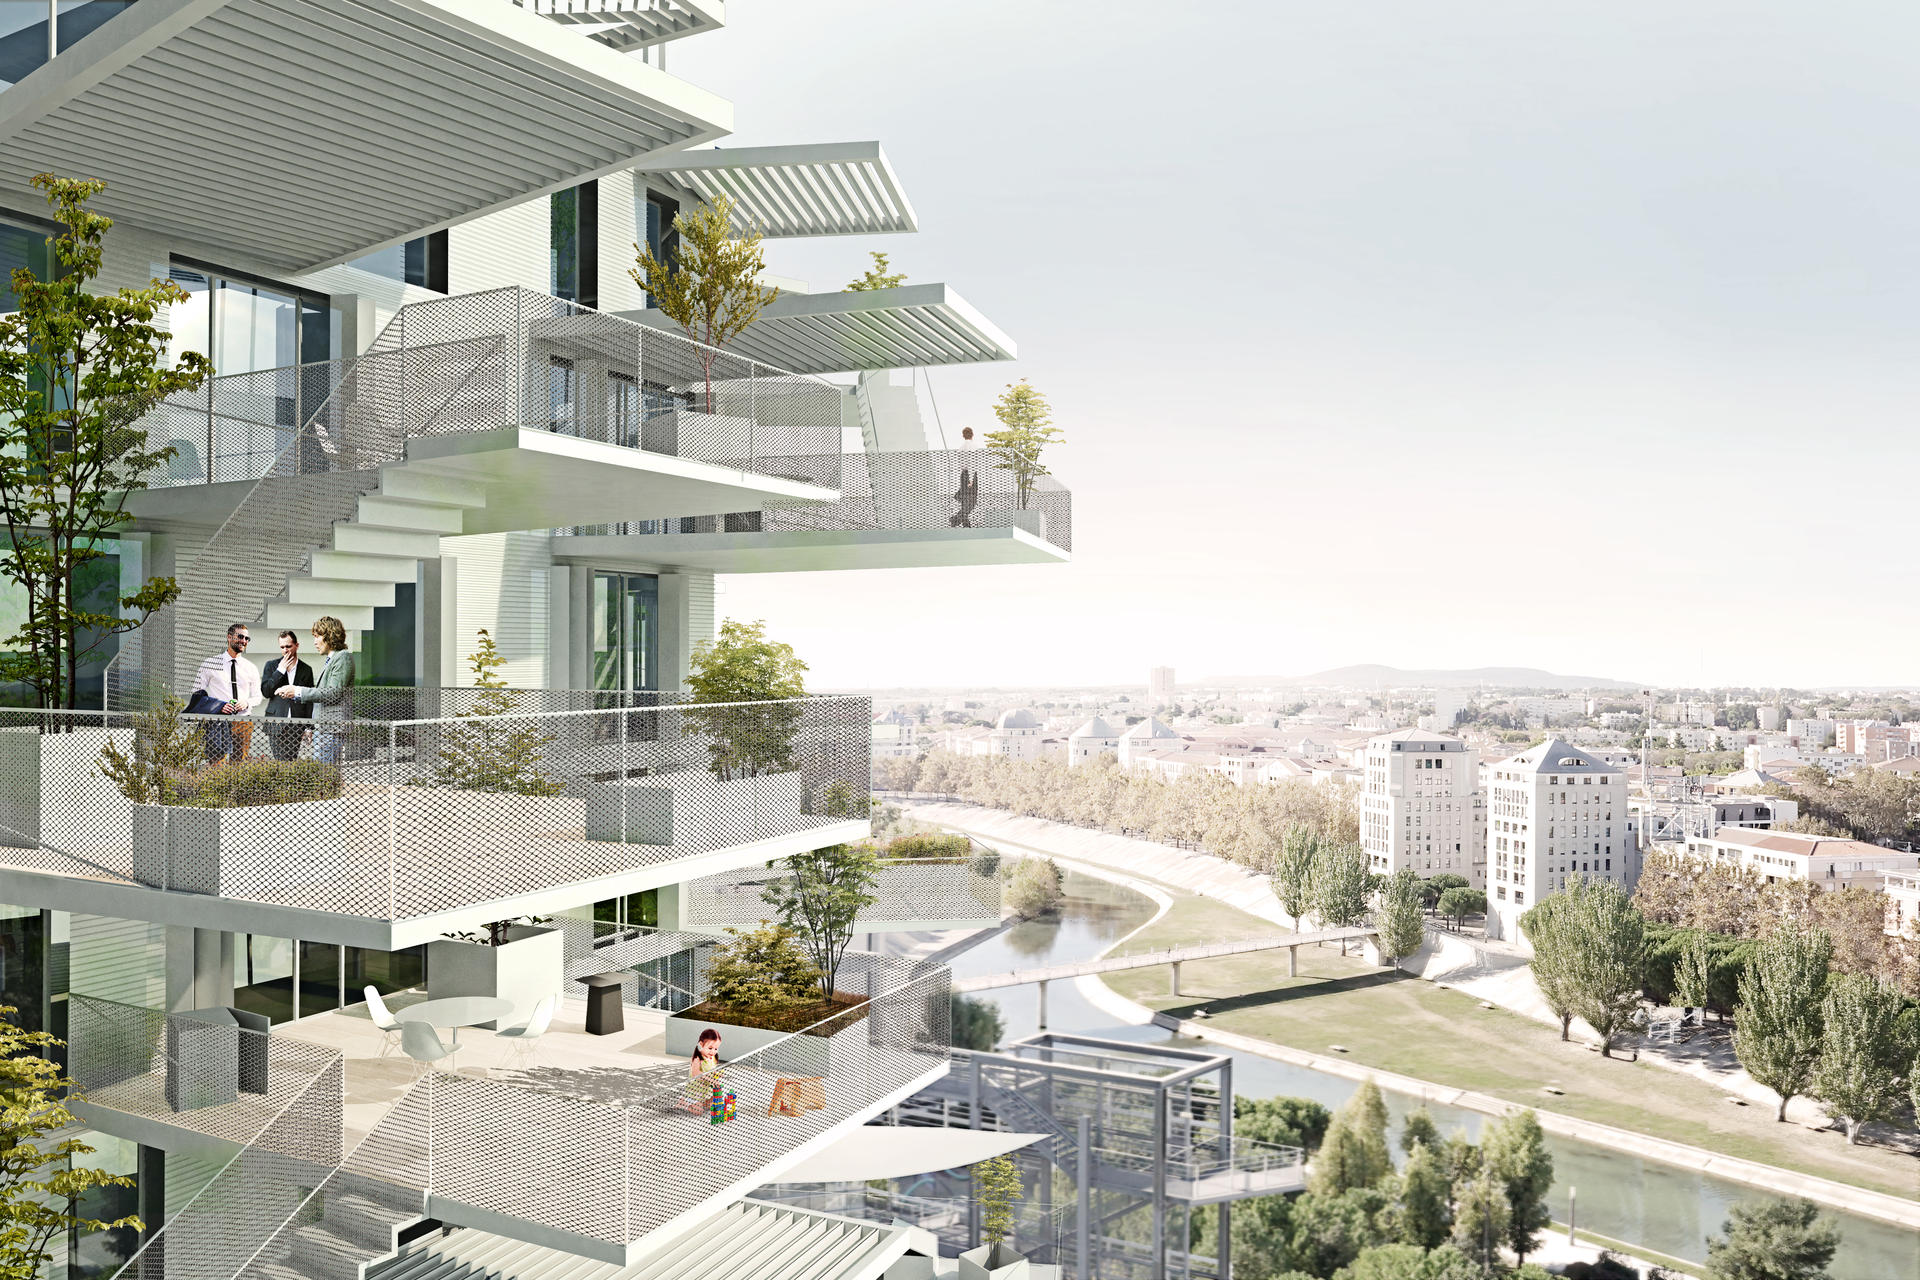 Richter 9 - Sou fujimoto architects / NL*A Paris / Oxo architects / RSI 